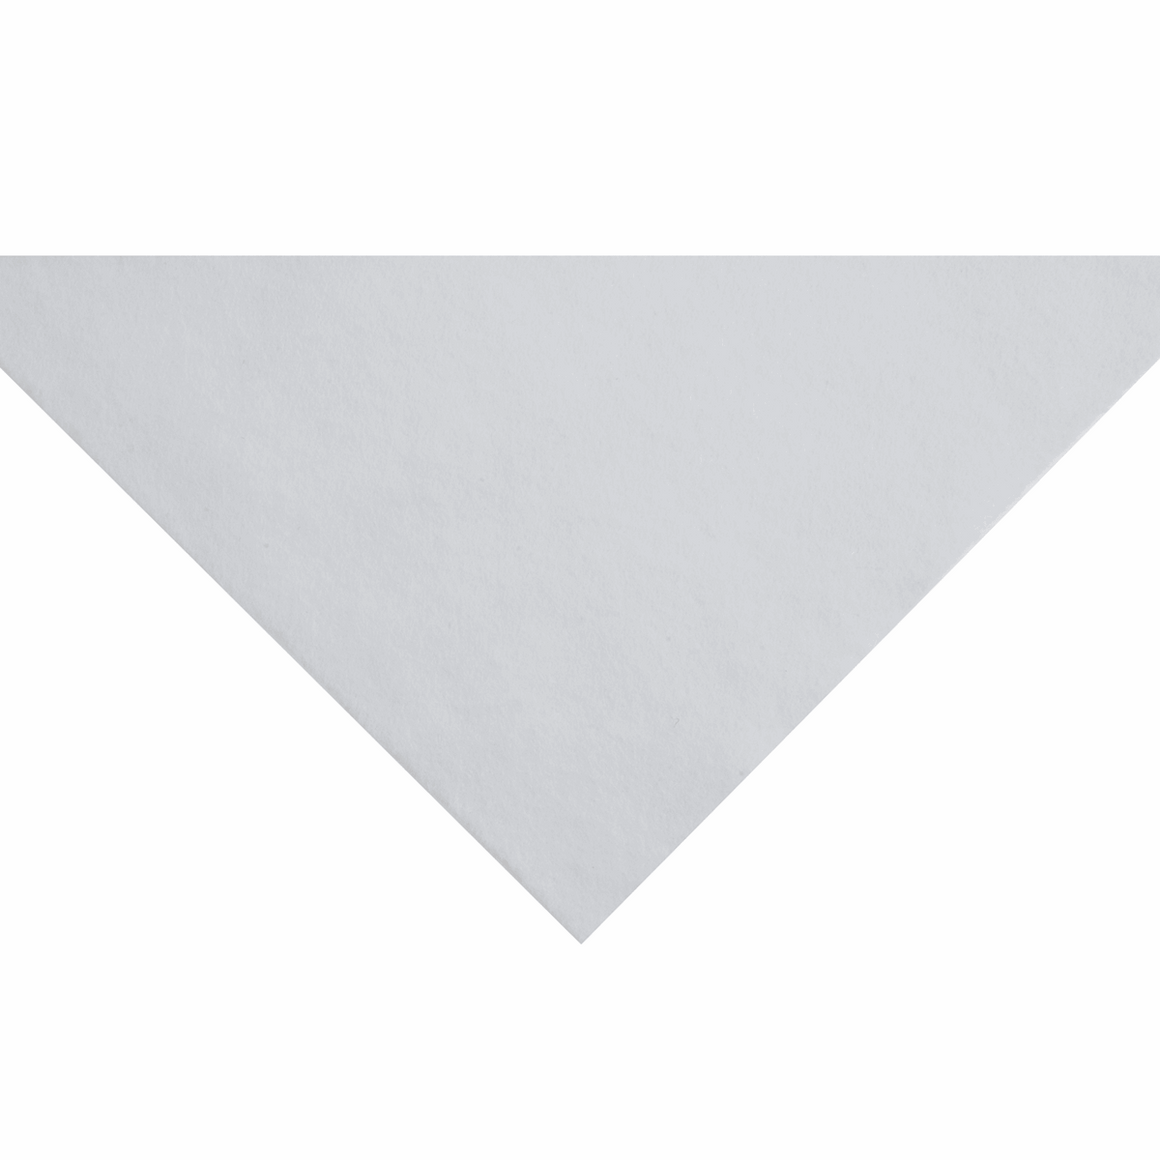 White Acrylic Felt - 1 x A4 sheet (23cm x 30cm | 9 x 12 inches)